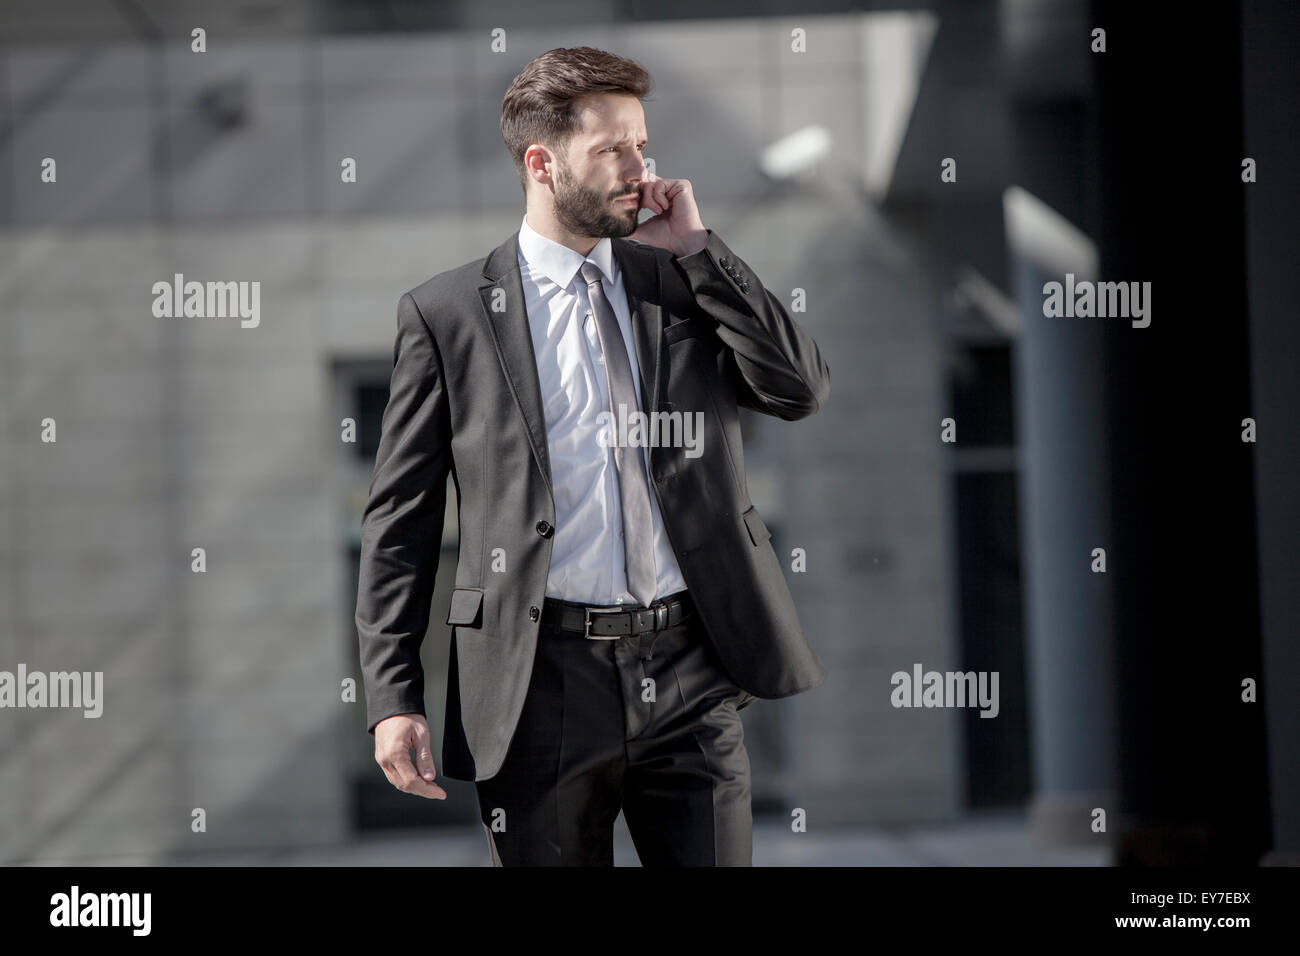 Businessman using phone outdoors Stock Photo